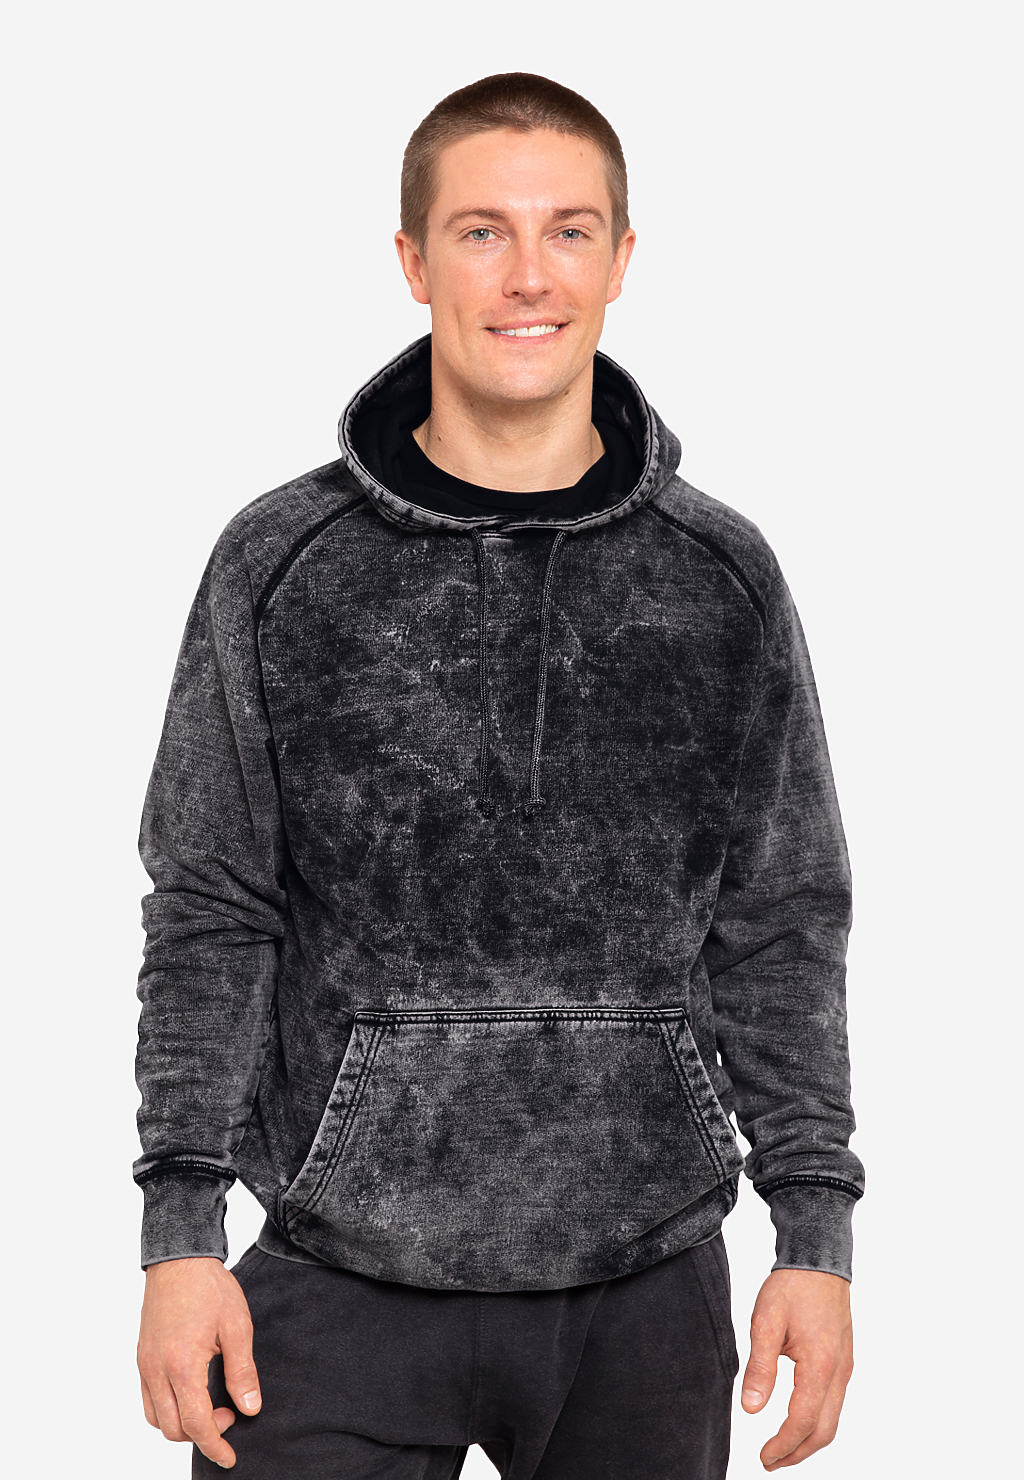 Custom Sweatshirts For Men, Wholesale Crewneck Sweatshirts, Raglan  Sweatshirt